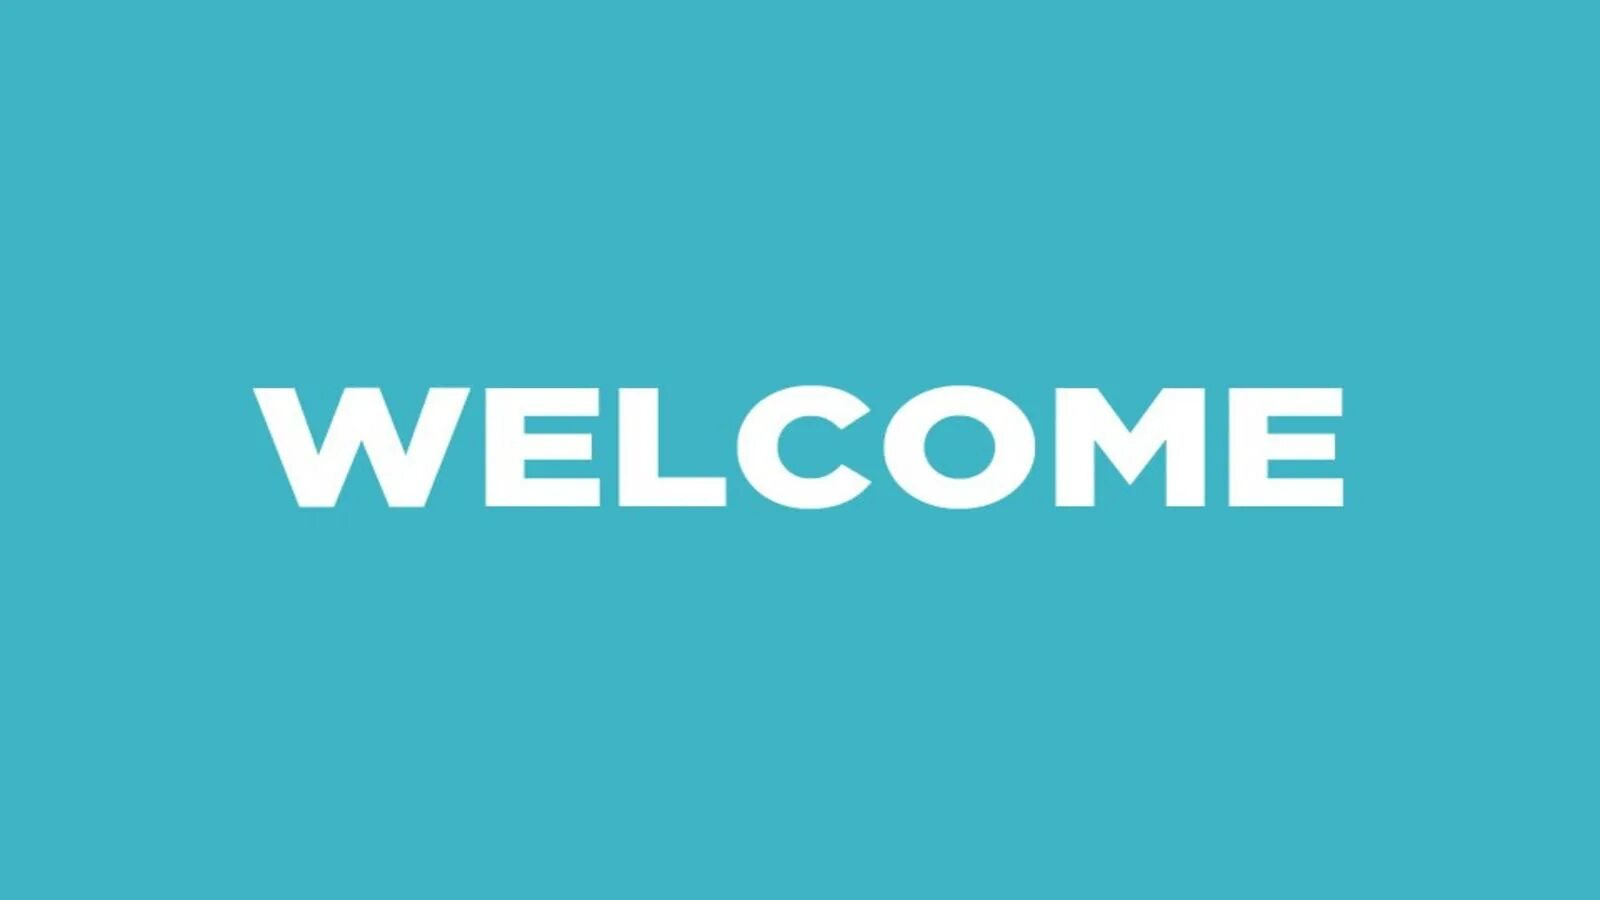 Картина Welcome. Логотип Welcome. Welcome картинка. Заставка Welcome.